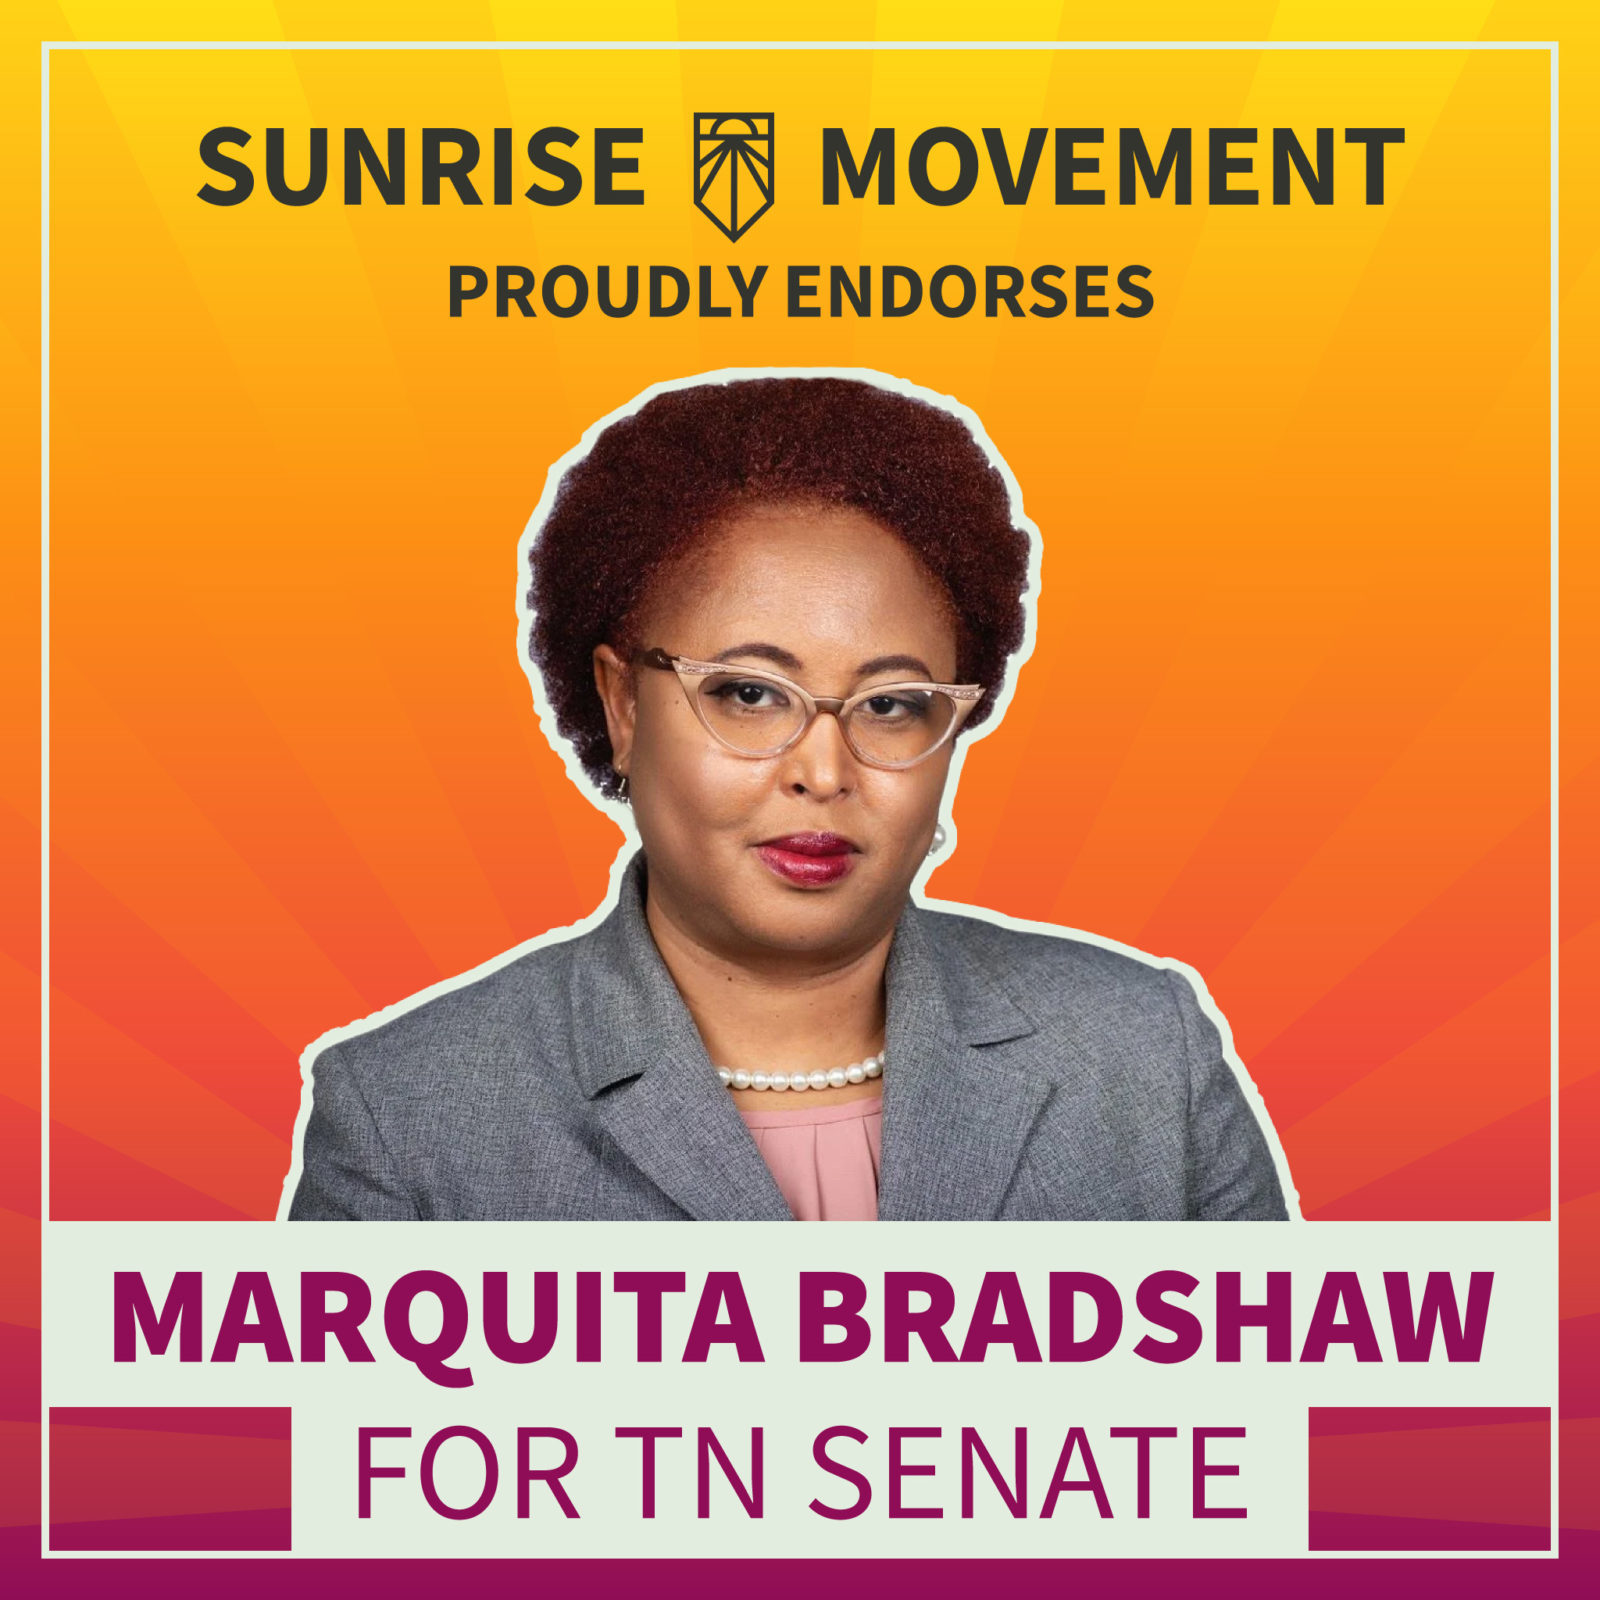 A photo of Marquita Bradshaw with text: Sunrise Movement proudly endorses Marquita Bradshaw for TN Senate.